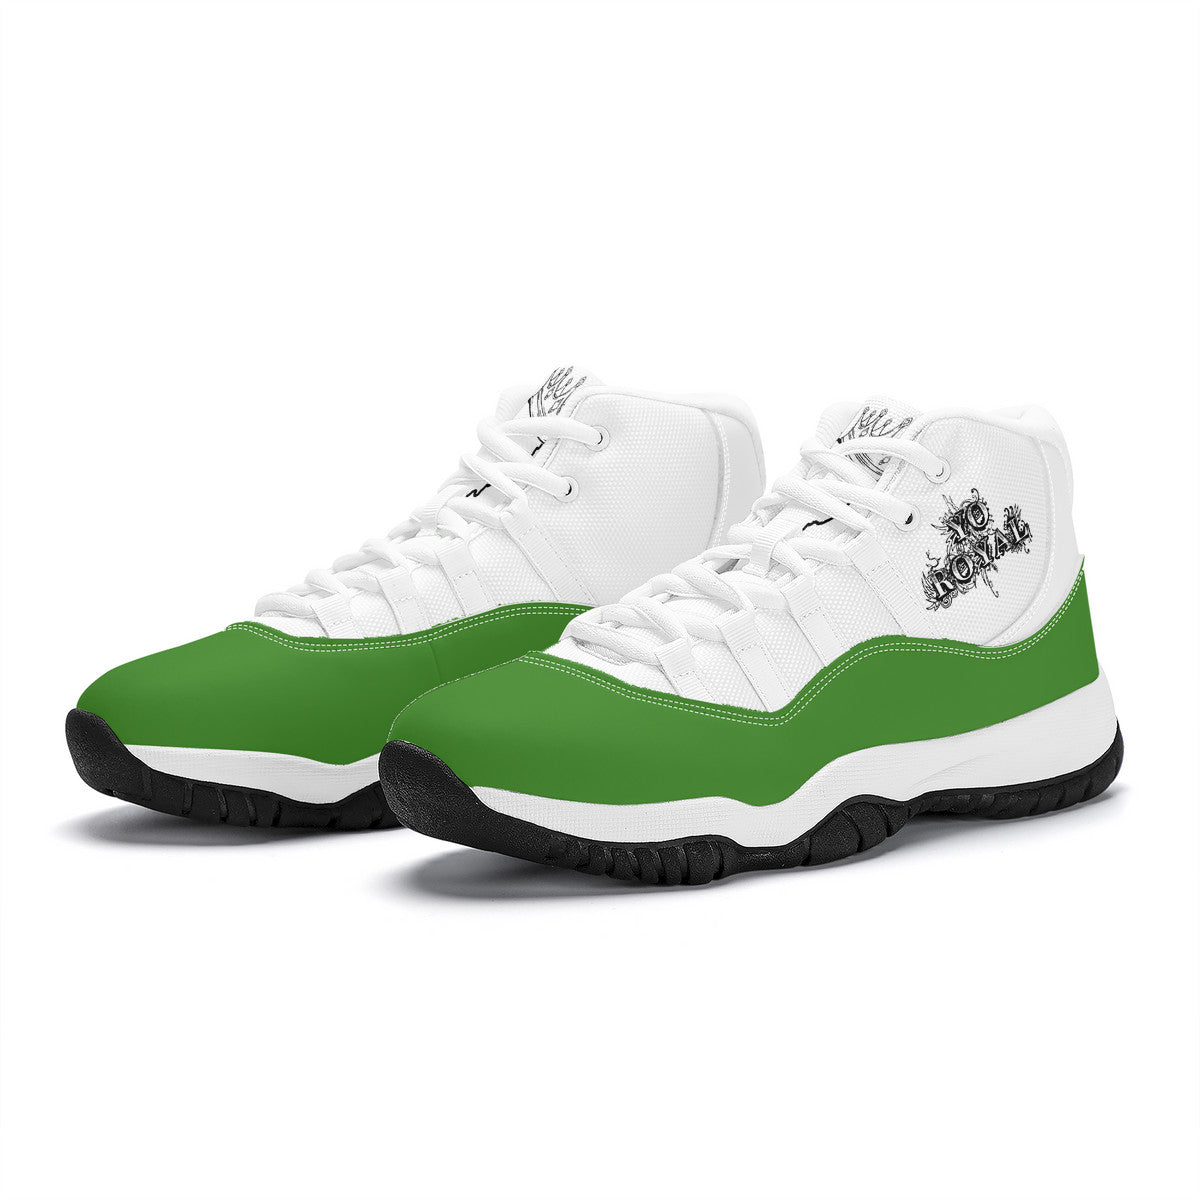 Green  High Top Air Retro Sneakers